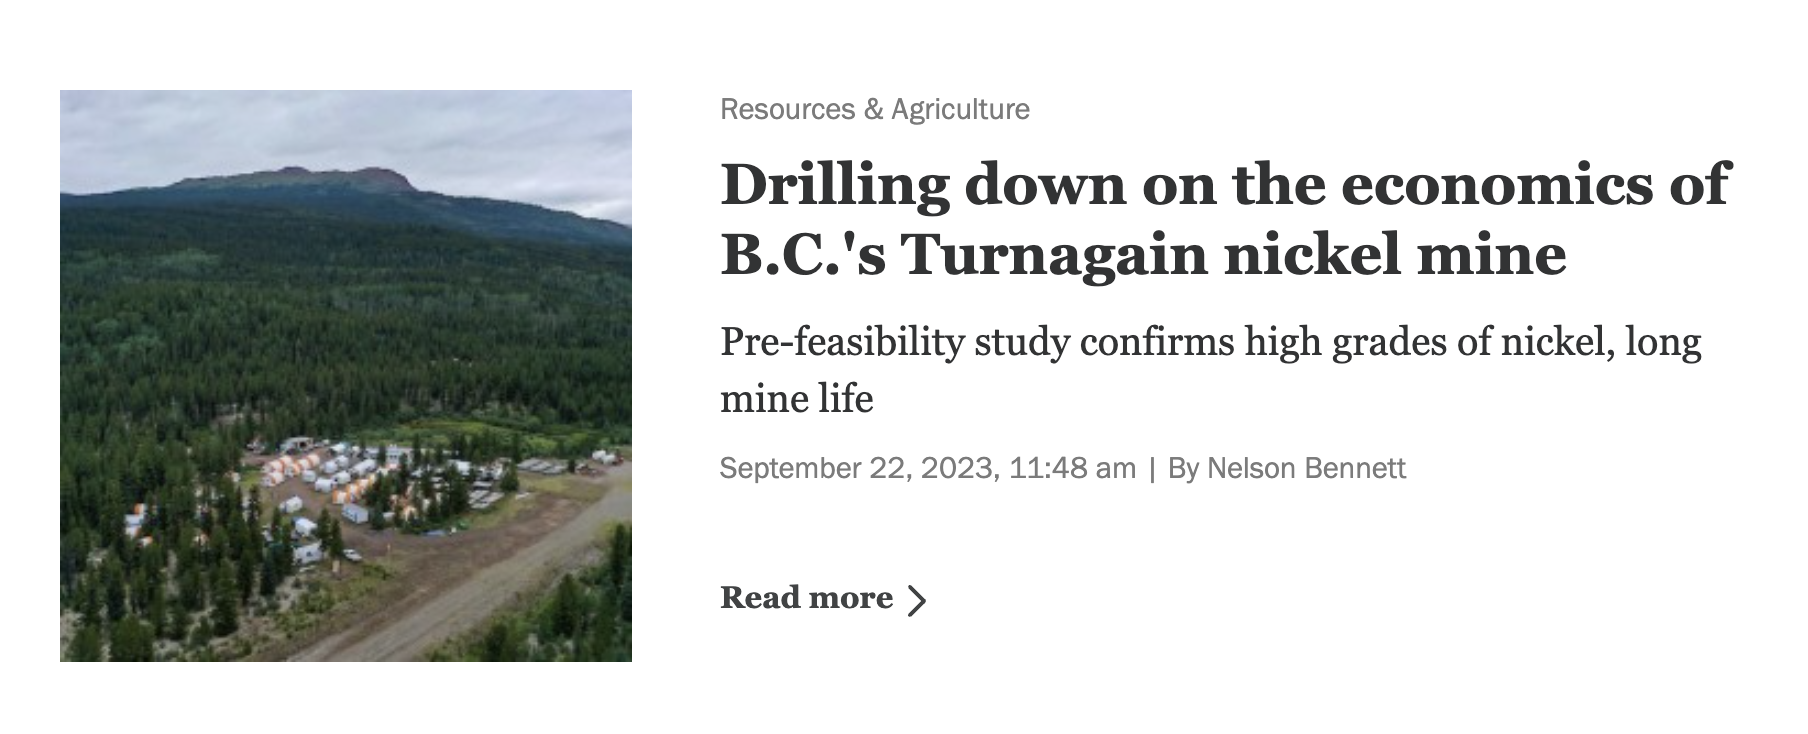 BIV: Drilling down on the economics of B.C.'s Turnagain nickel mine